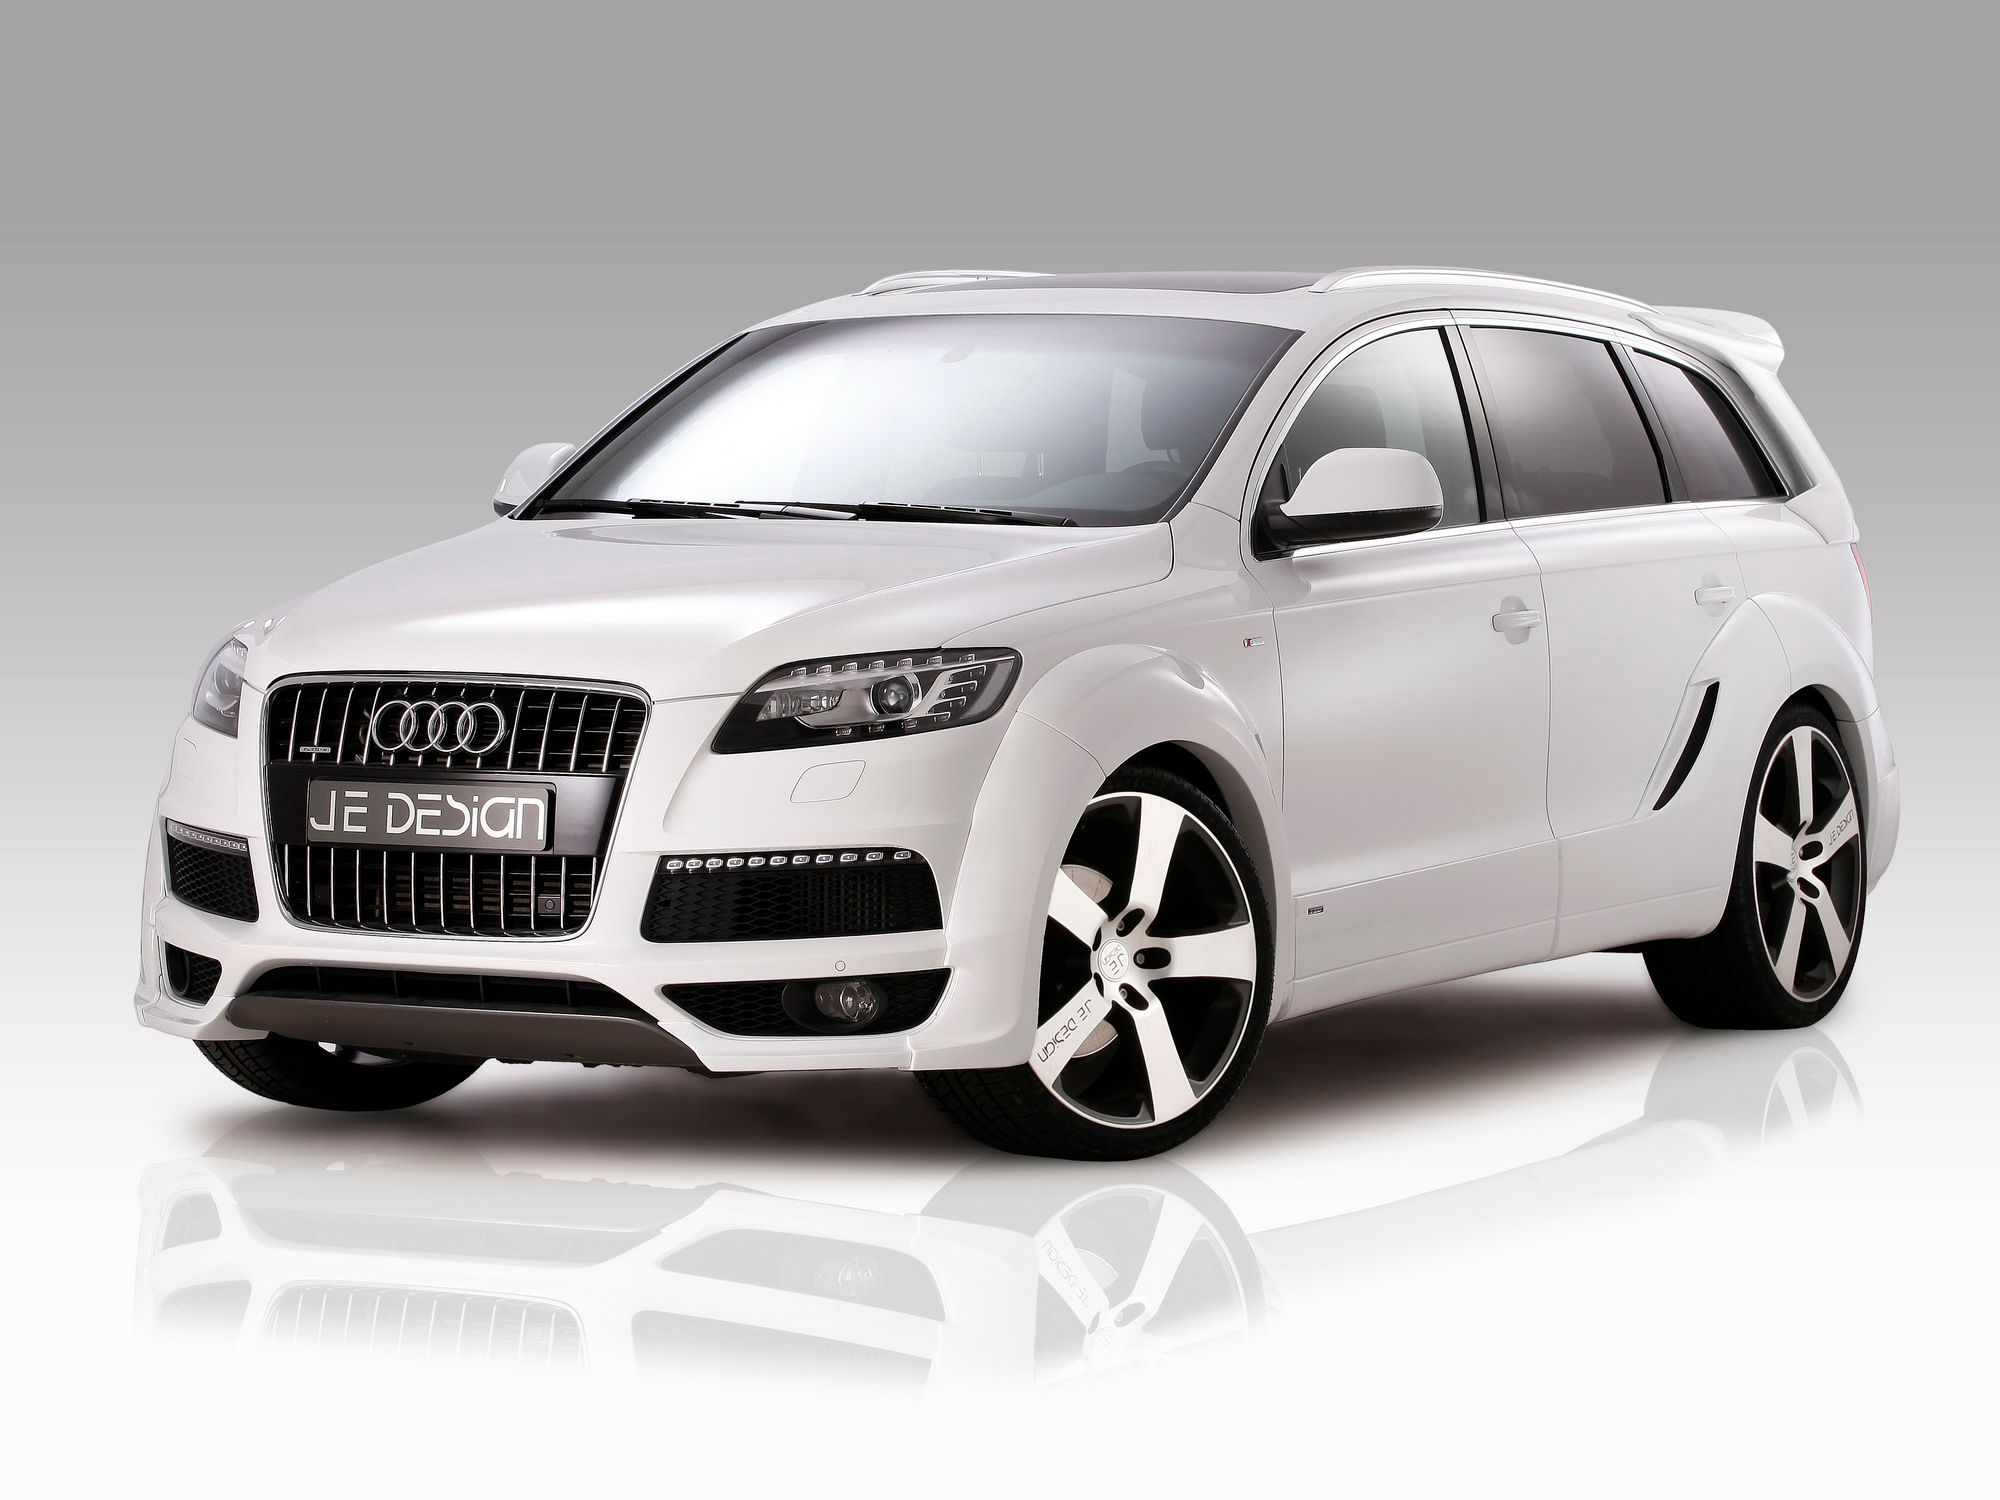 2011 Audi Q7 S-Line by Je Design